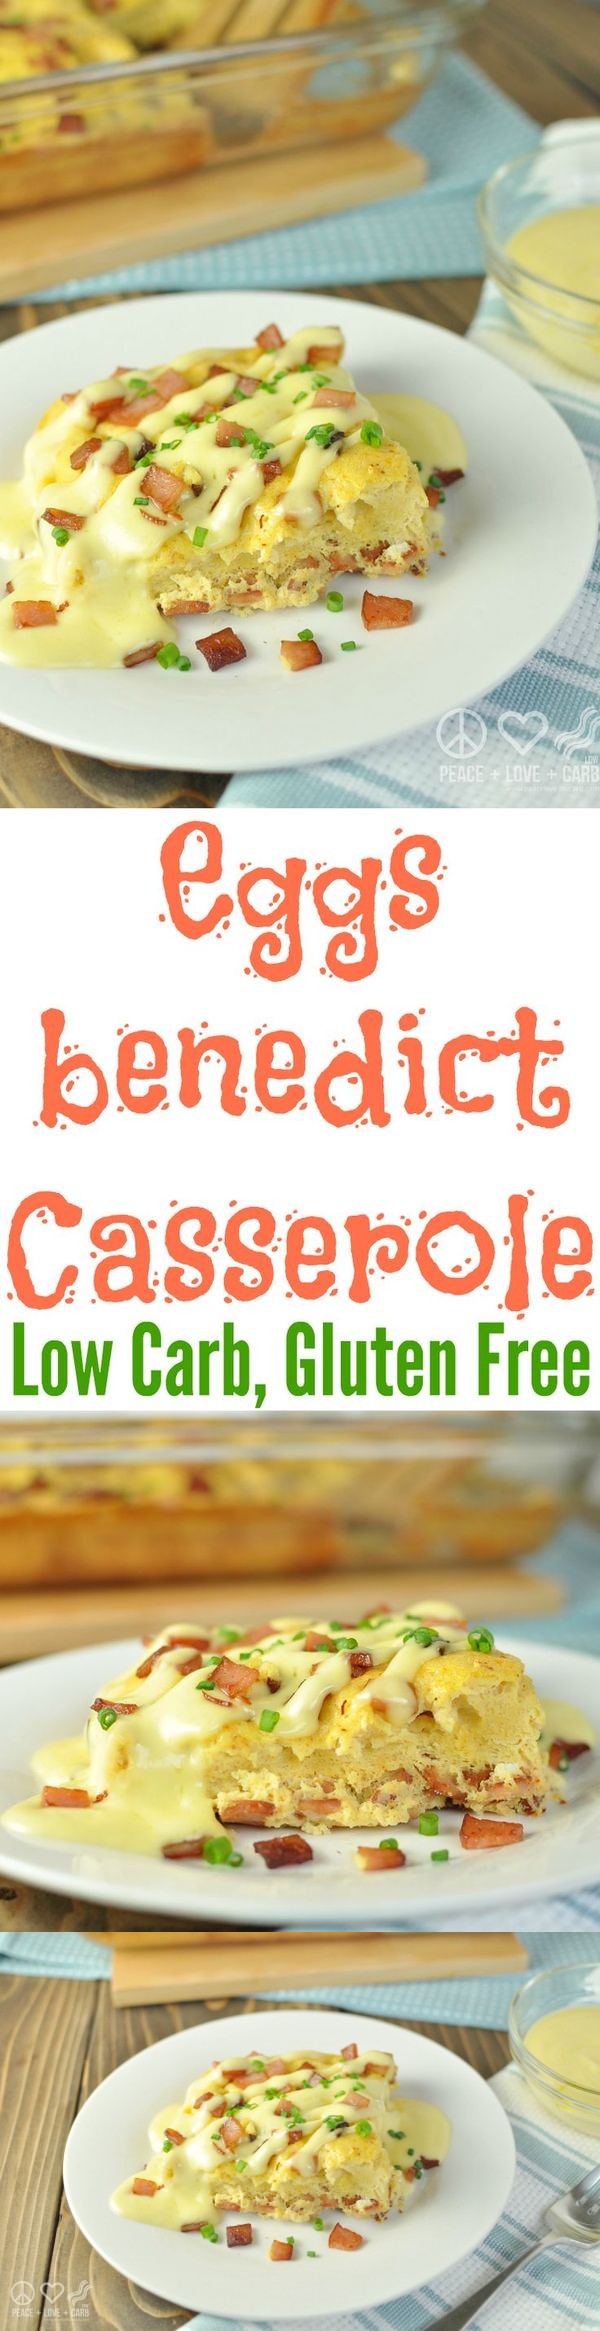 Eggs Benedict Casserole - Low Carb, Gluten Free